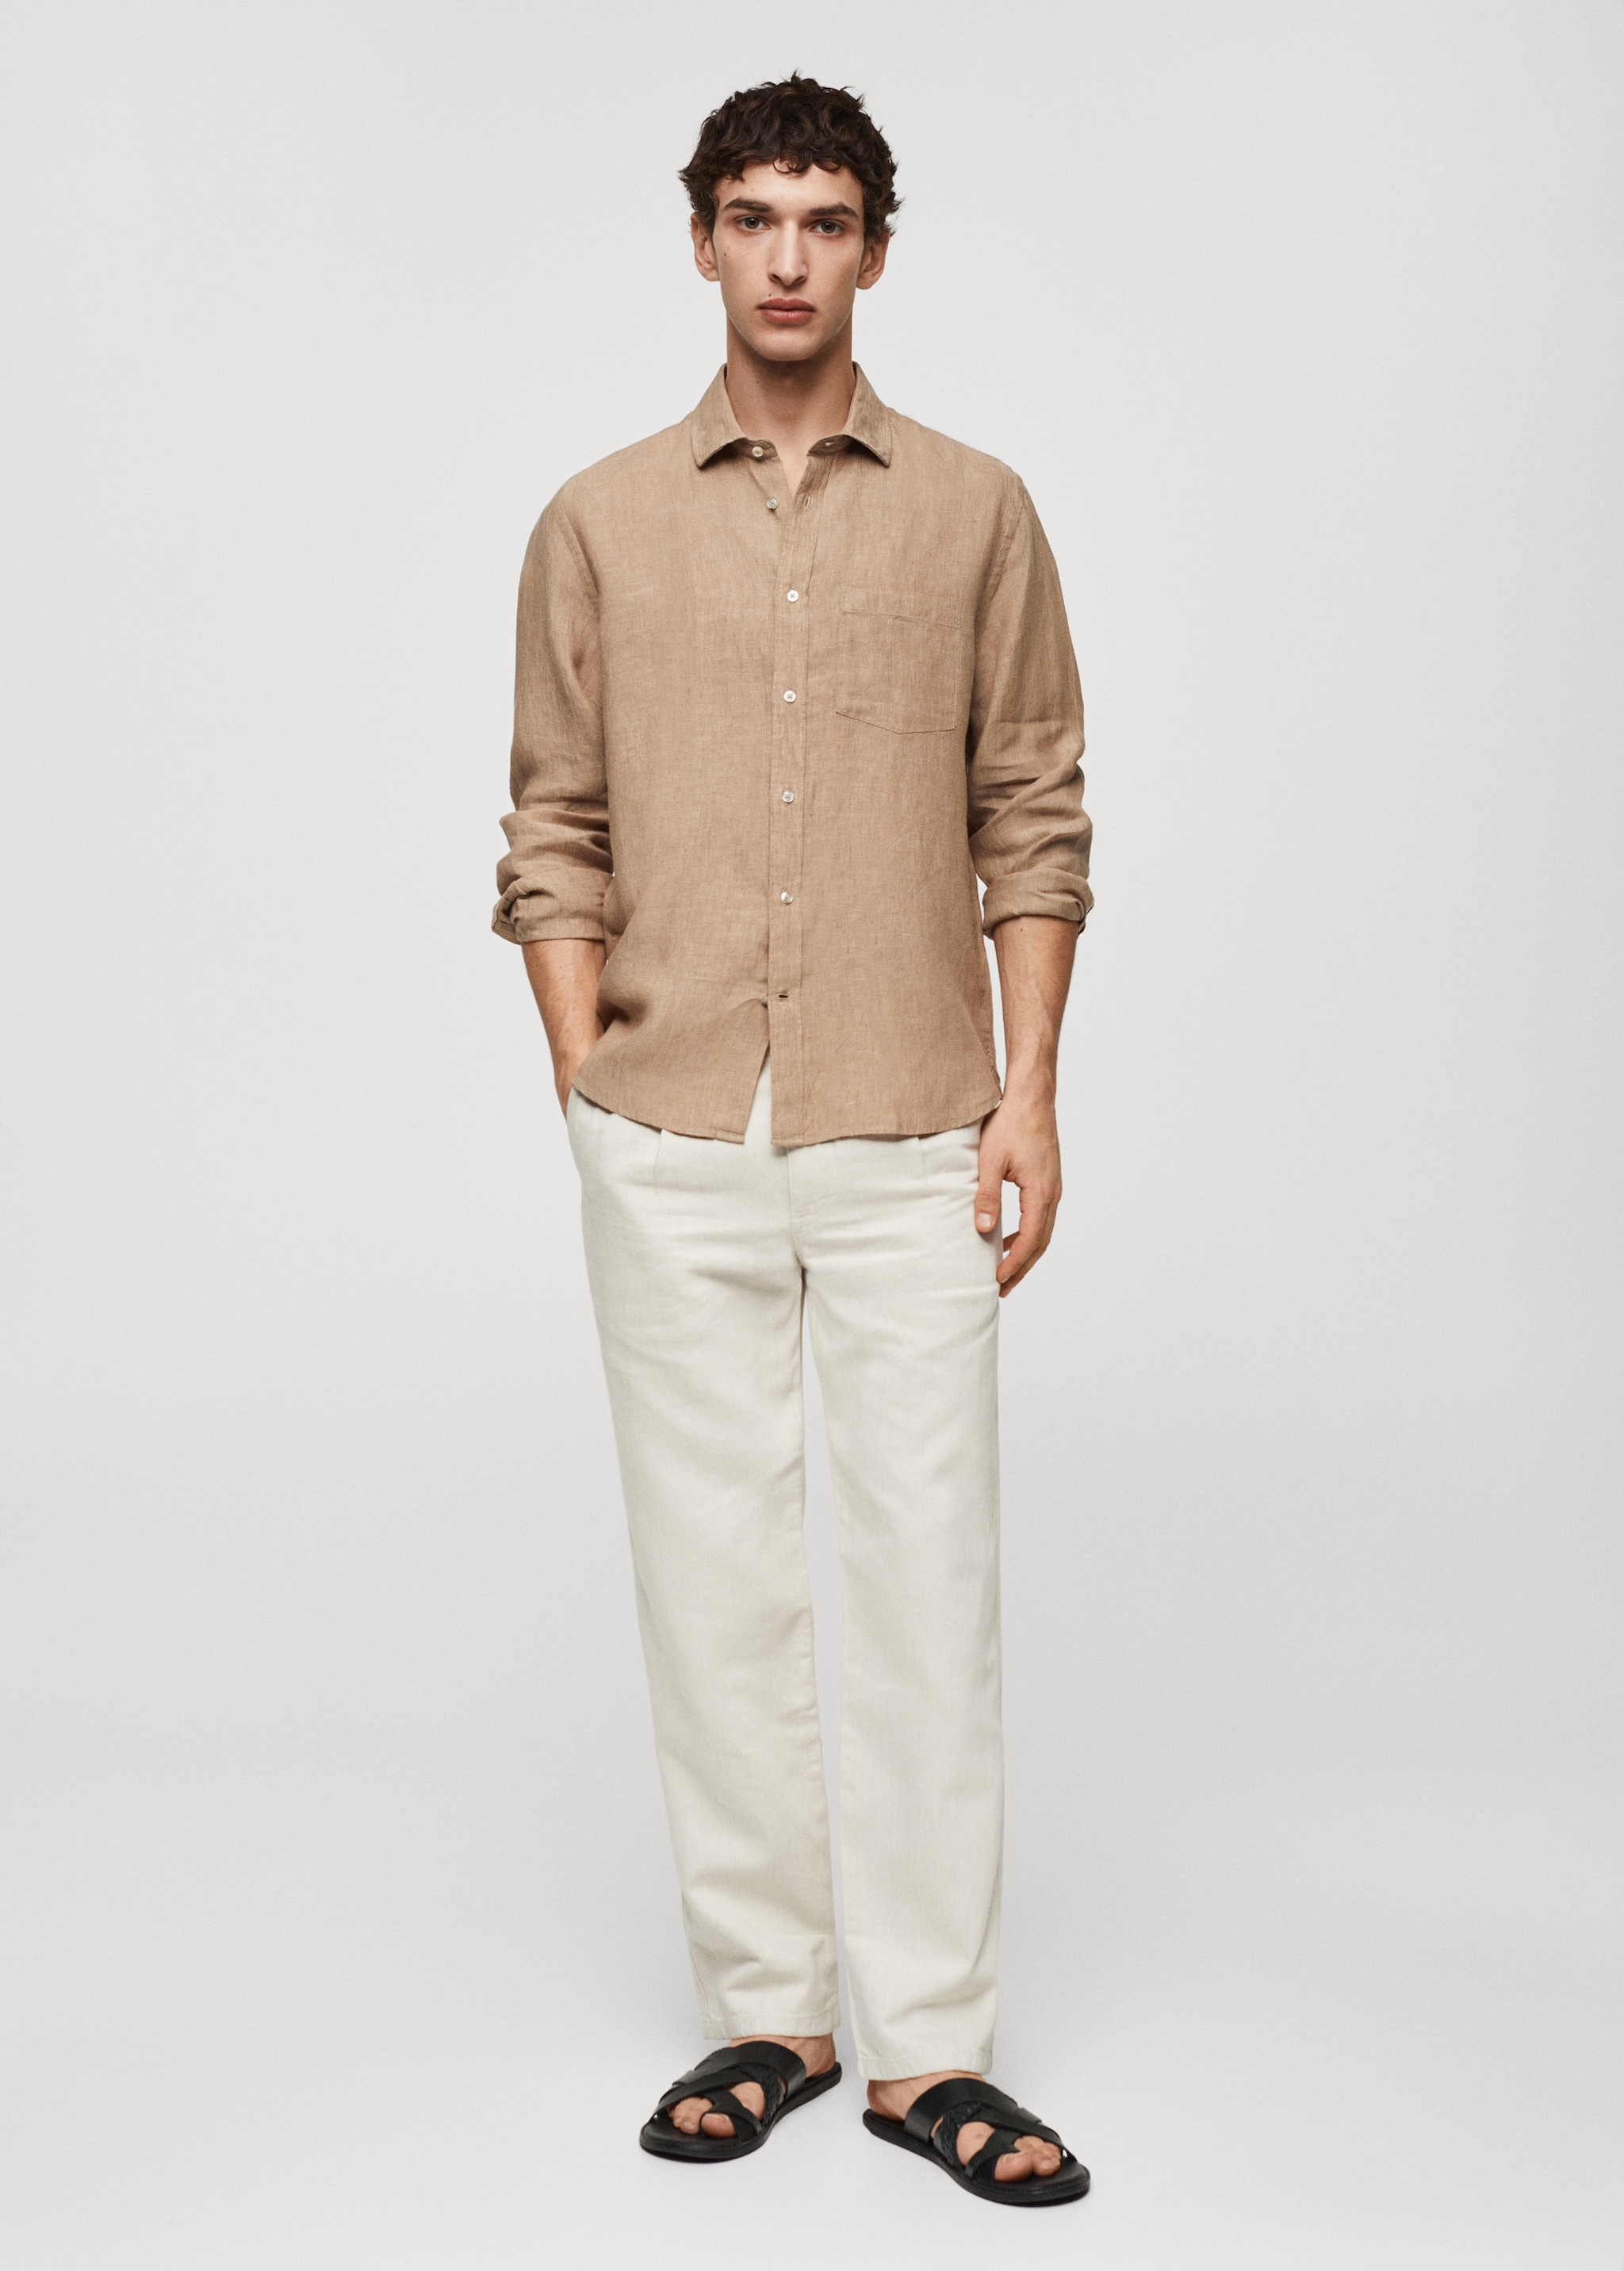 Camisa classic fit 100% lino - Plano general